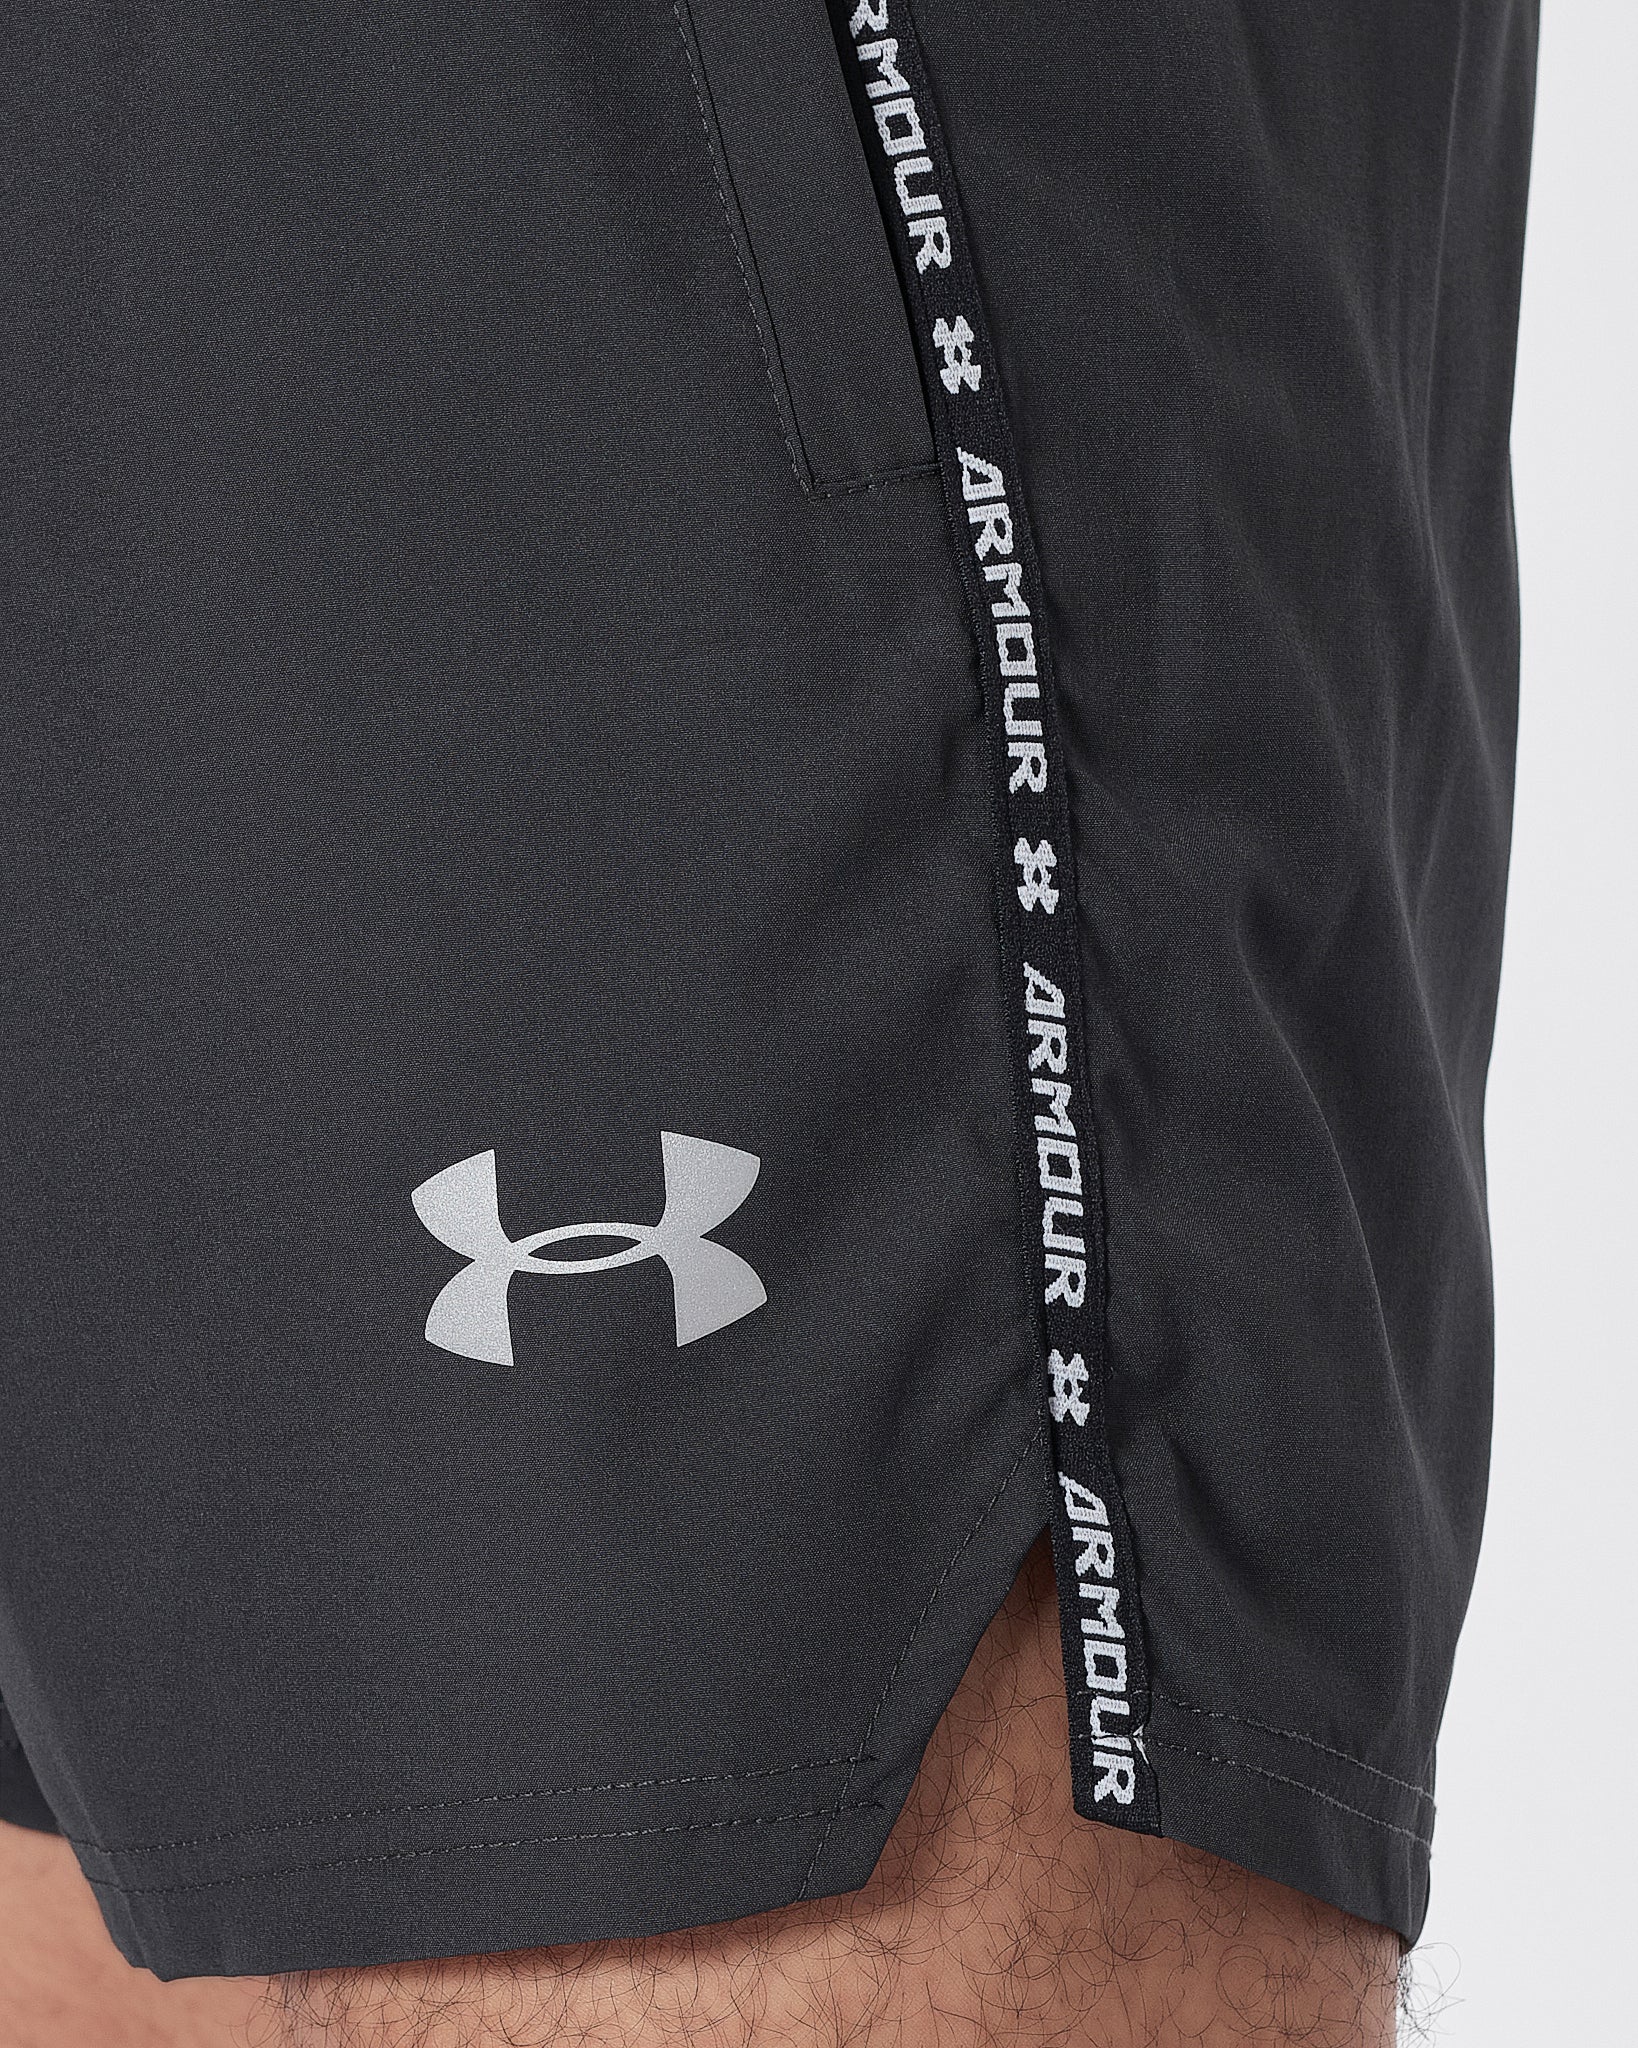 UA Logo Vertical Striped Men Dark Grey Track Shorts 12.90